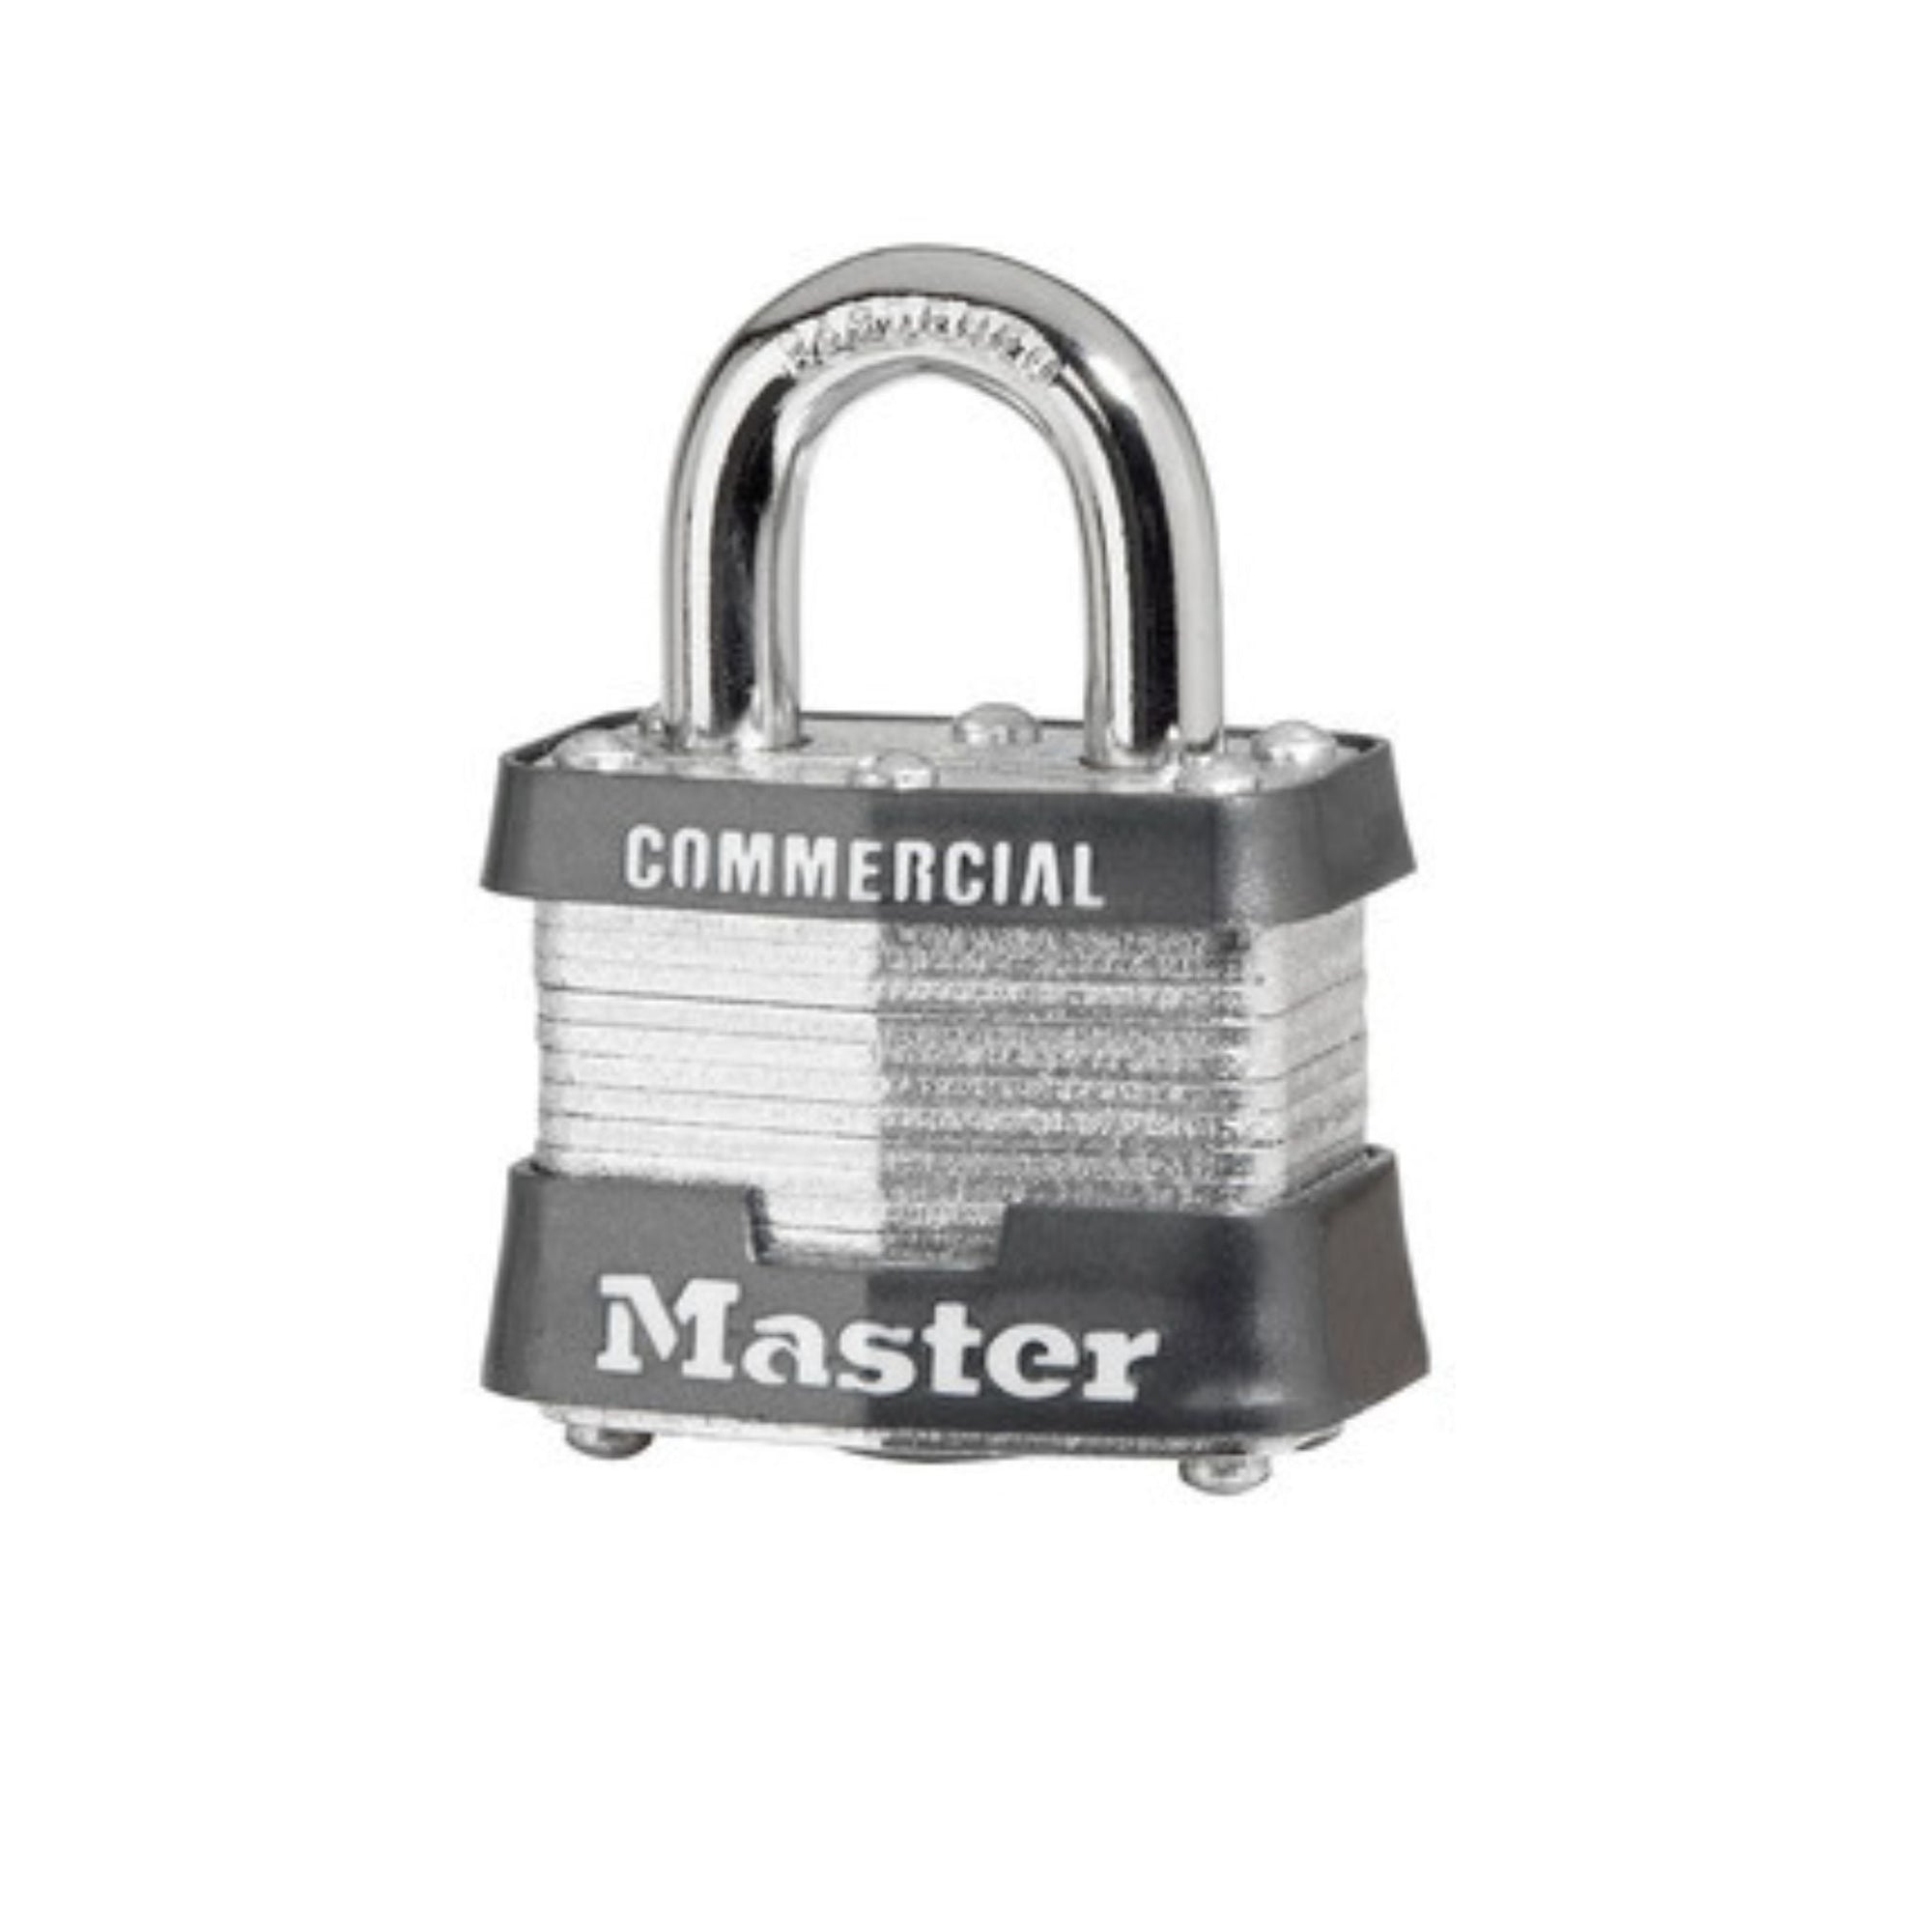 Master Lock 3KA 0305 Lock Laminated steel No. 3 Series Padlock Keyed to Match Existing Key Number KA0305 - The Lock Source